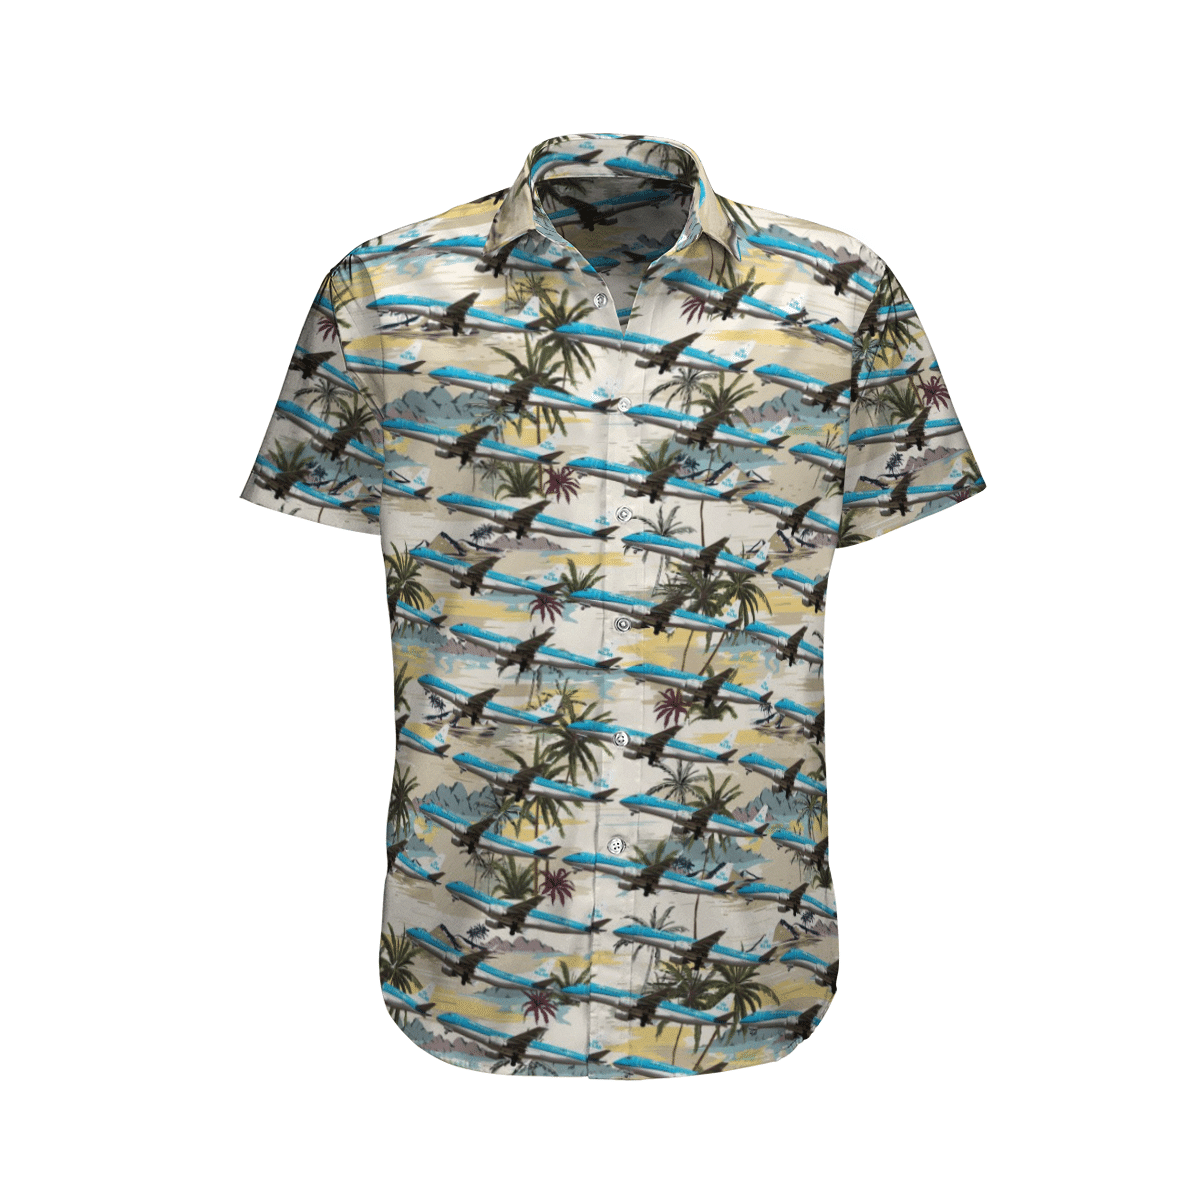 Get a new Hawaiian shirt to enjoy summer vacation 141